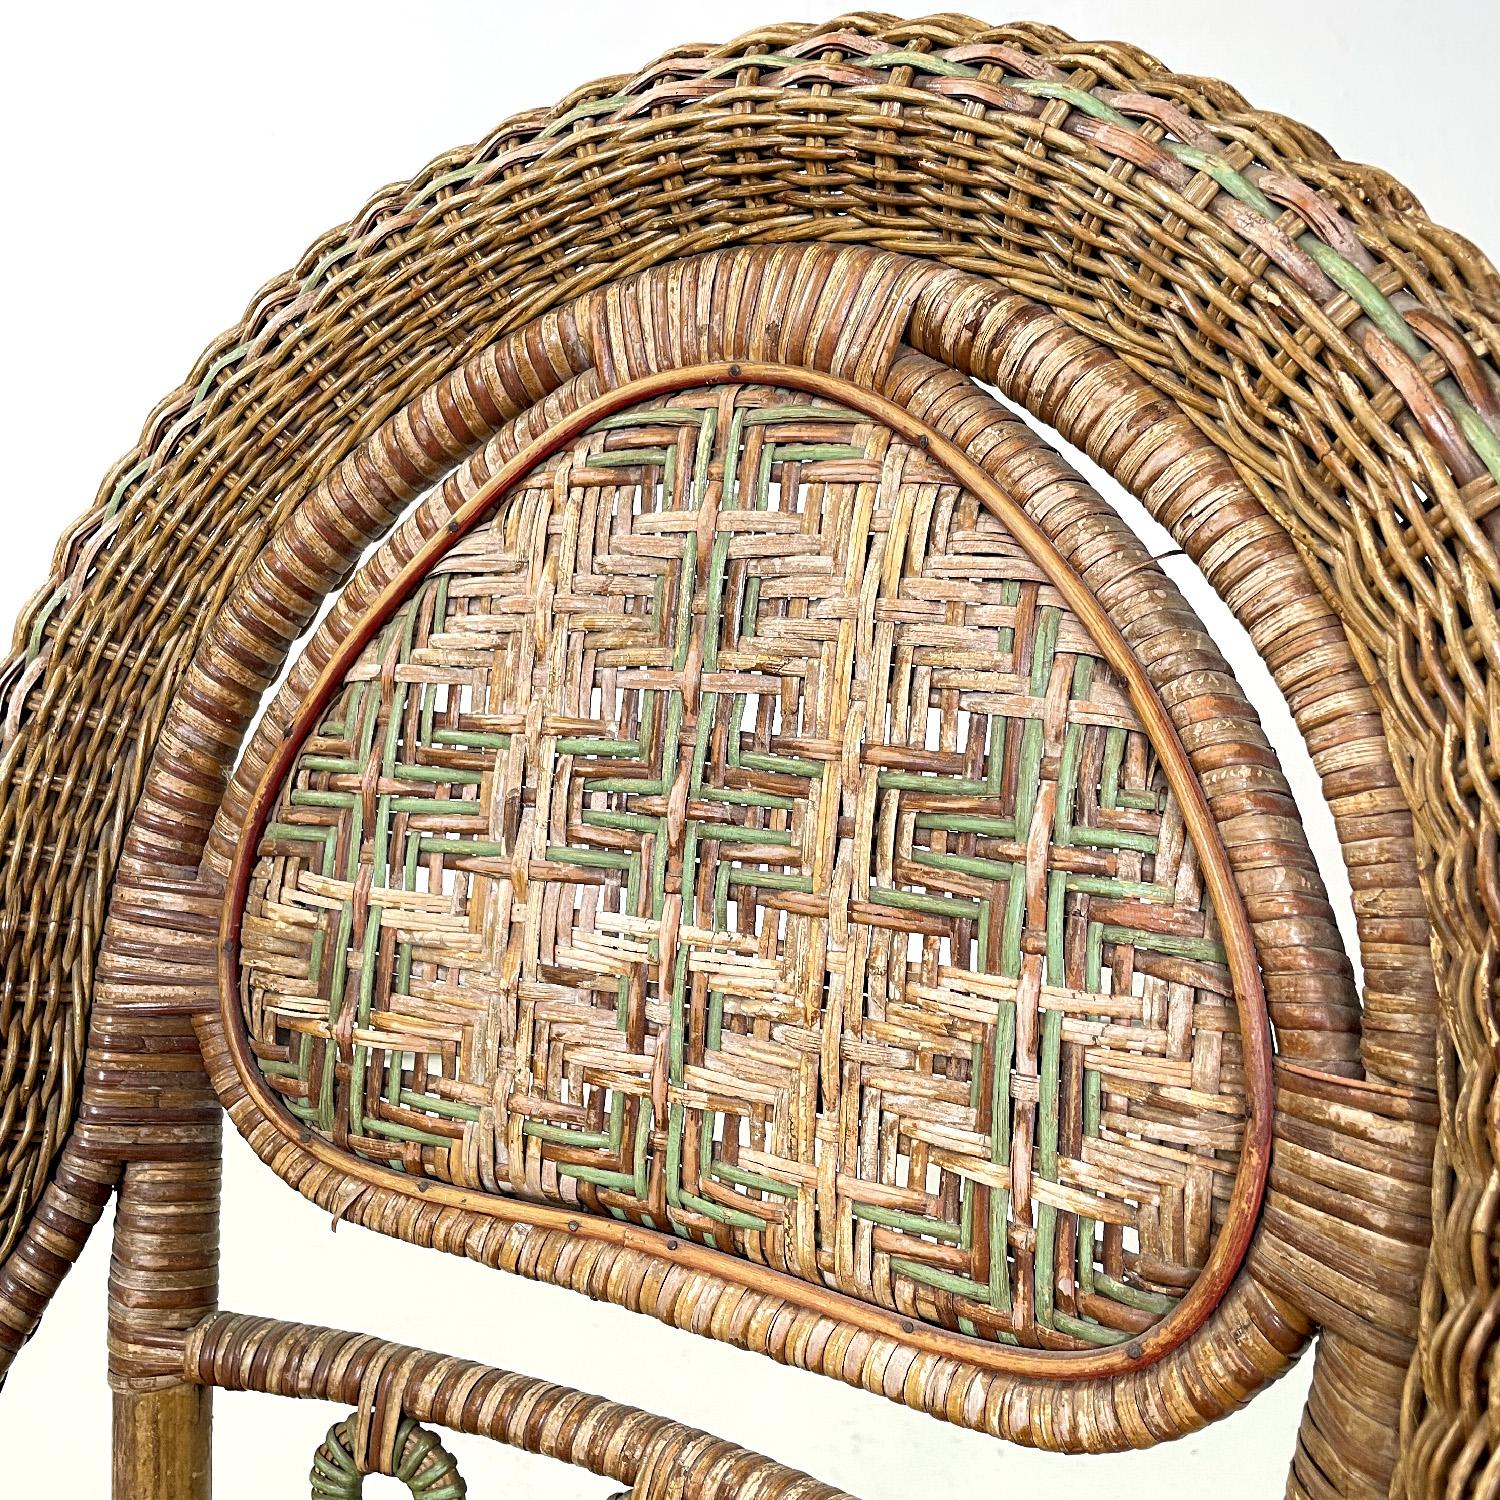 Italian antique rattan chairs by Mongiardino and Bonacina for Bonacina, 1900s For Sale 4